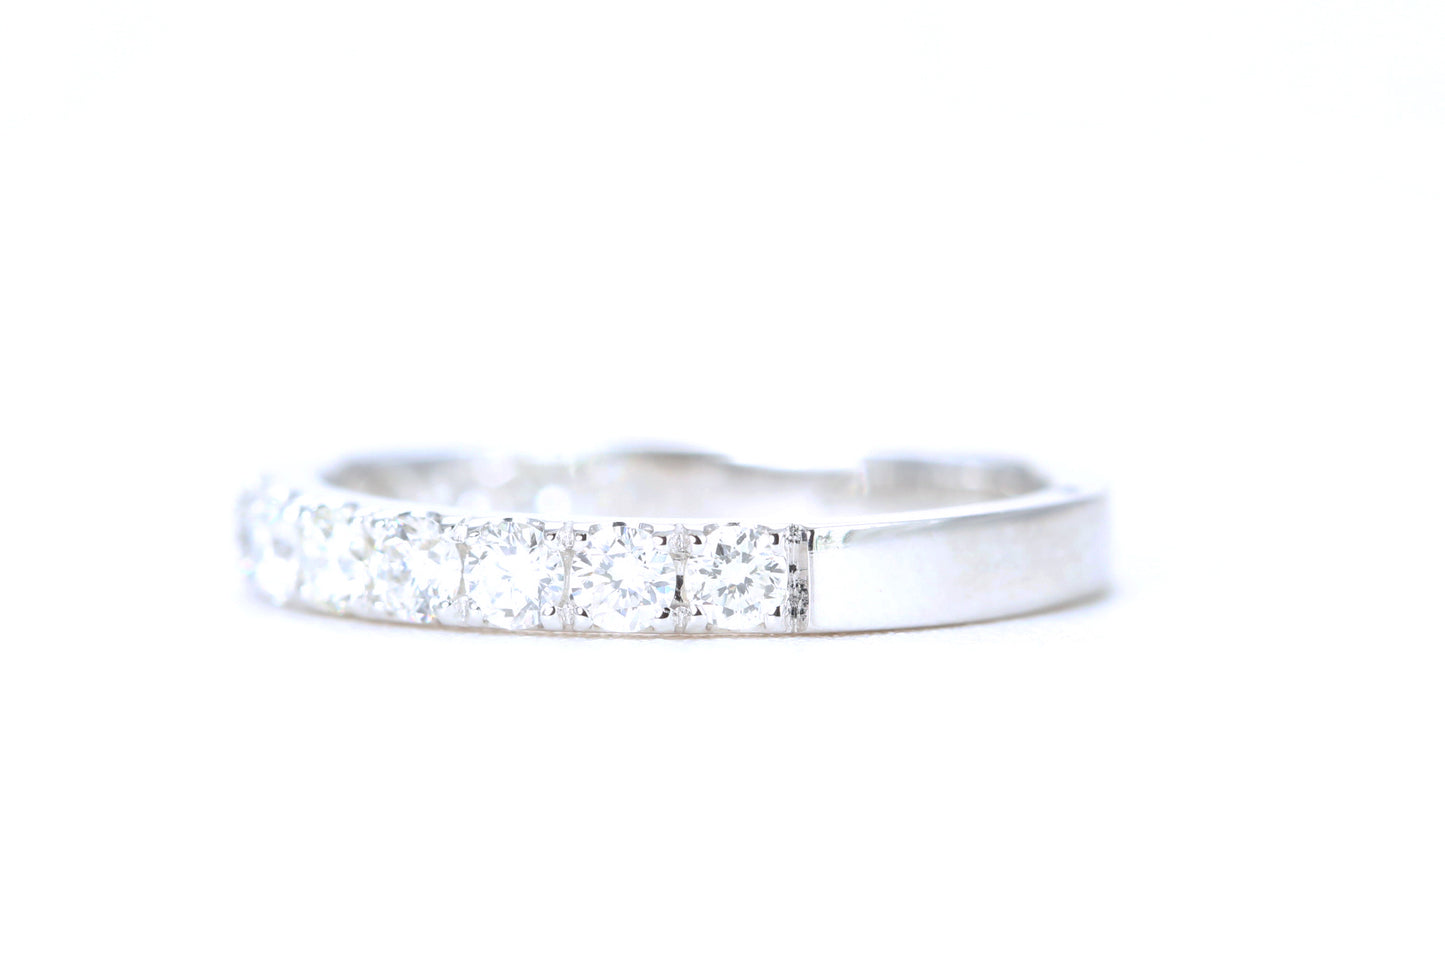 Micro Pavé 3/4 Carat Diamond Ring in 14K White Gold